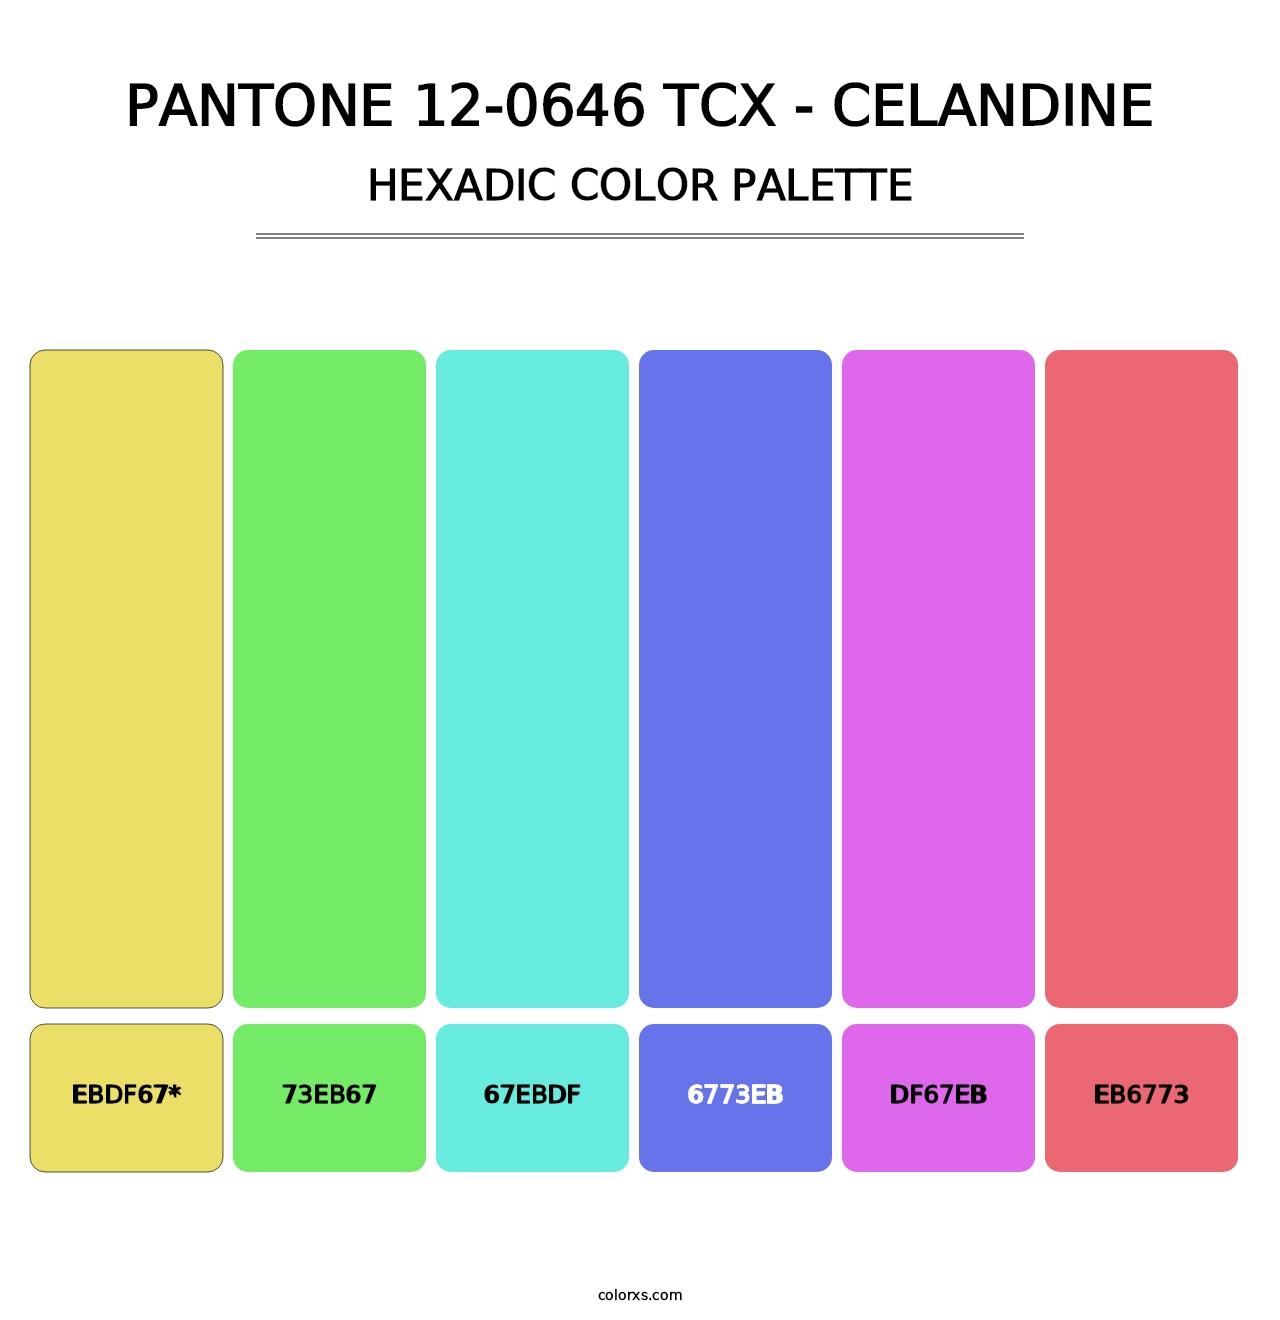 PANTONE 12-0646 TCX - Celandine - Hexadic Color Palette